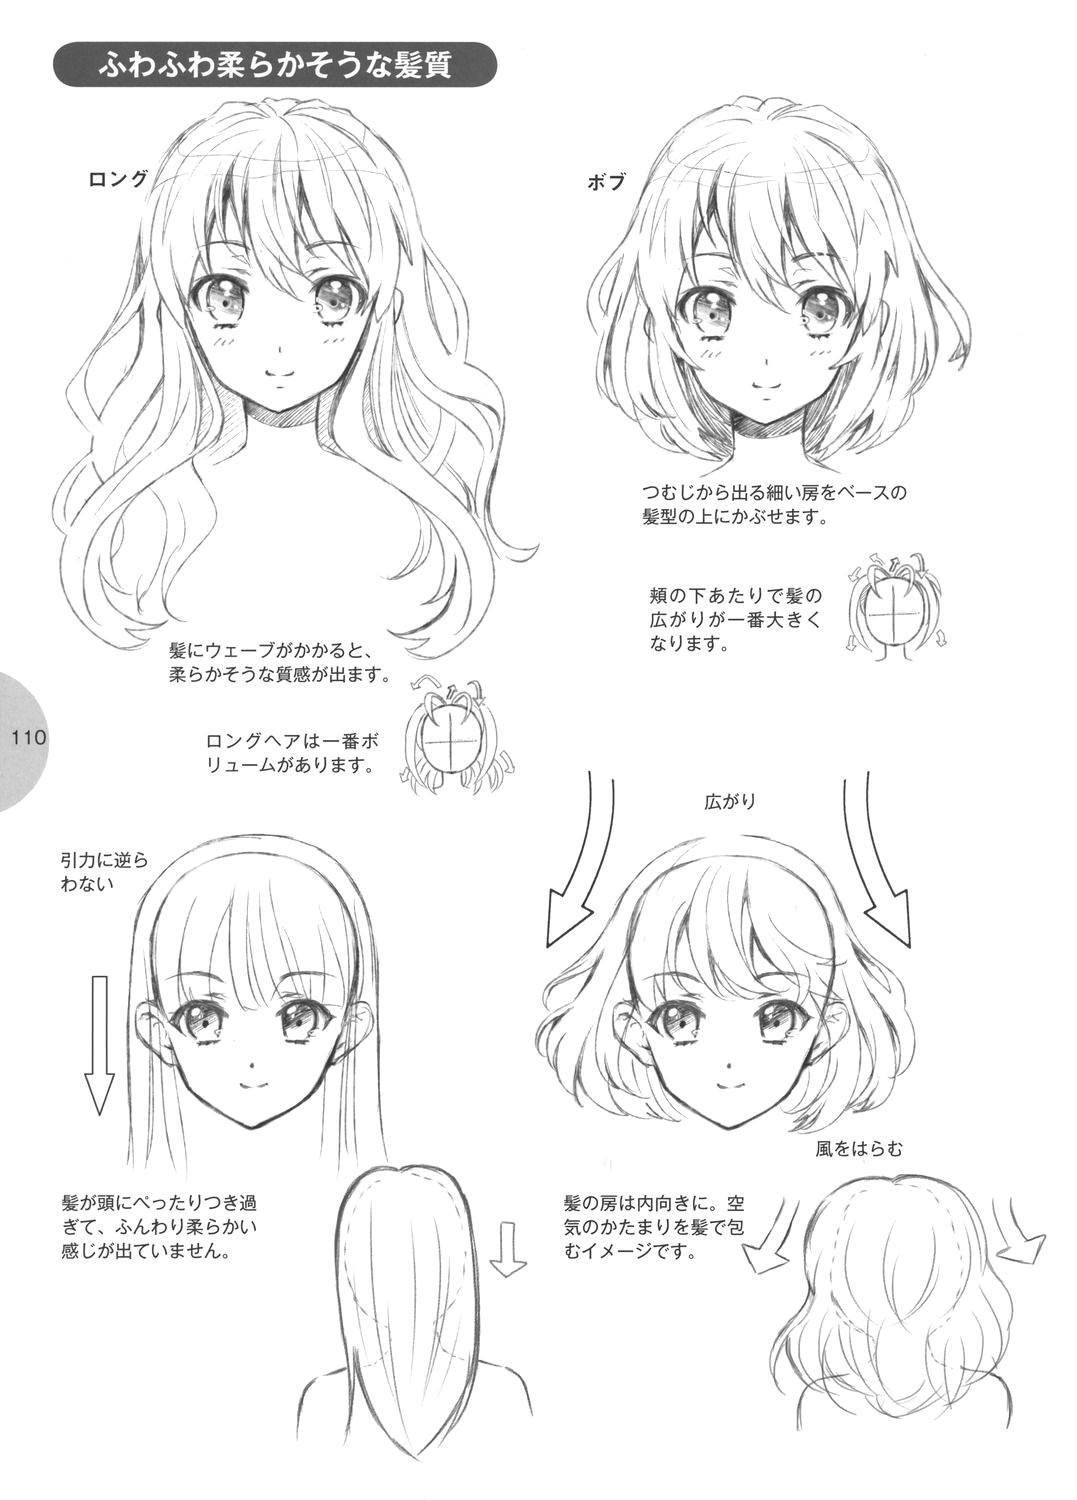 How to Draw Anime Eyebrows Tutorial Hair Manga Hair How to Draw Hair Anime Hair